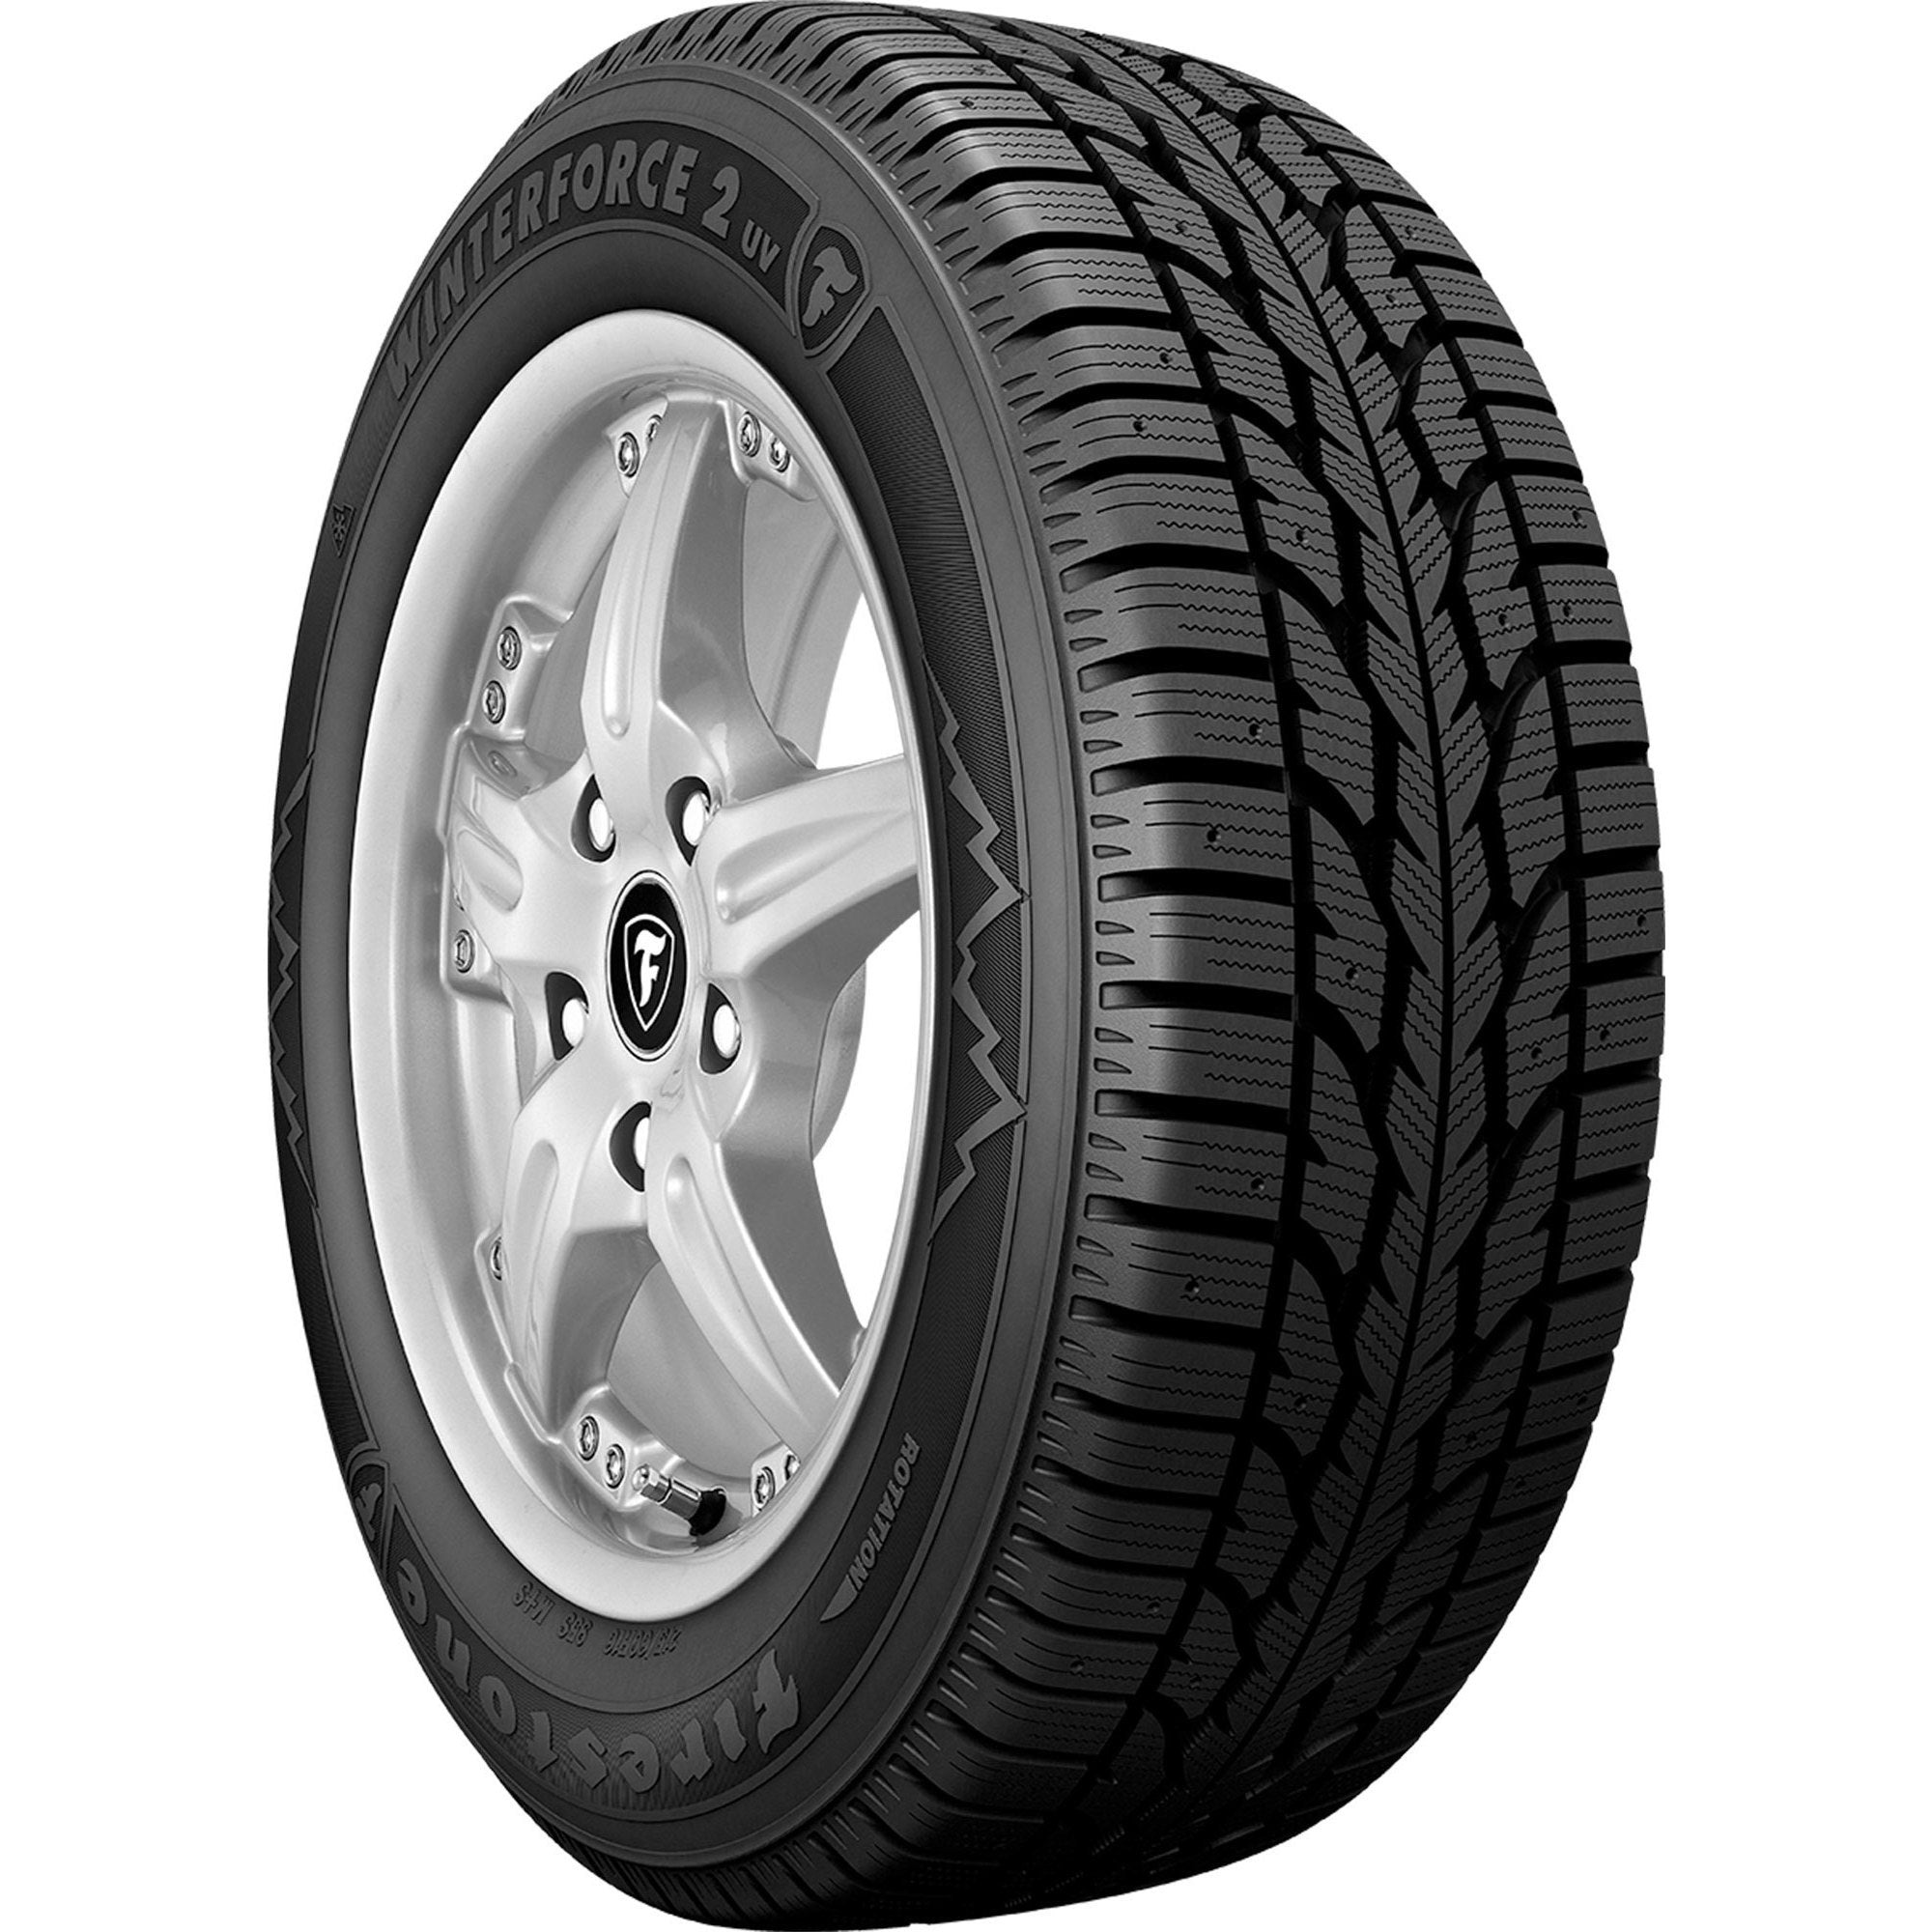 FIRESTONE WINTERFORCE2 UV P235/75R15 (28.9X9.3R 15) Tires